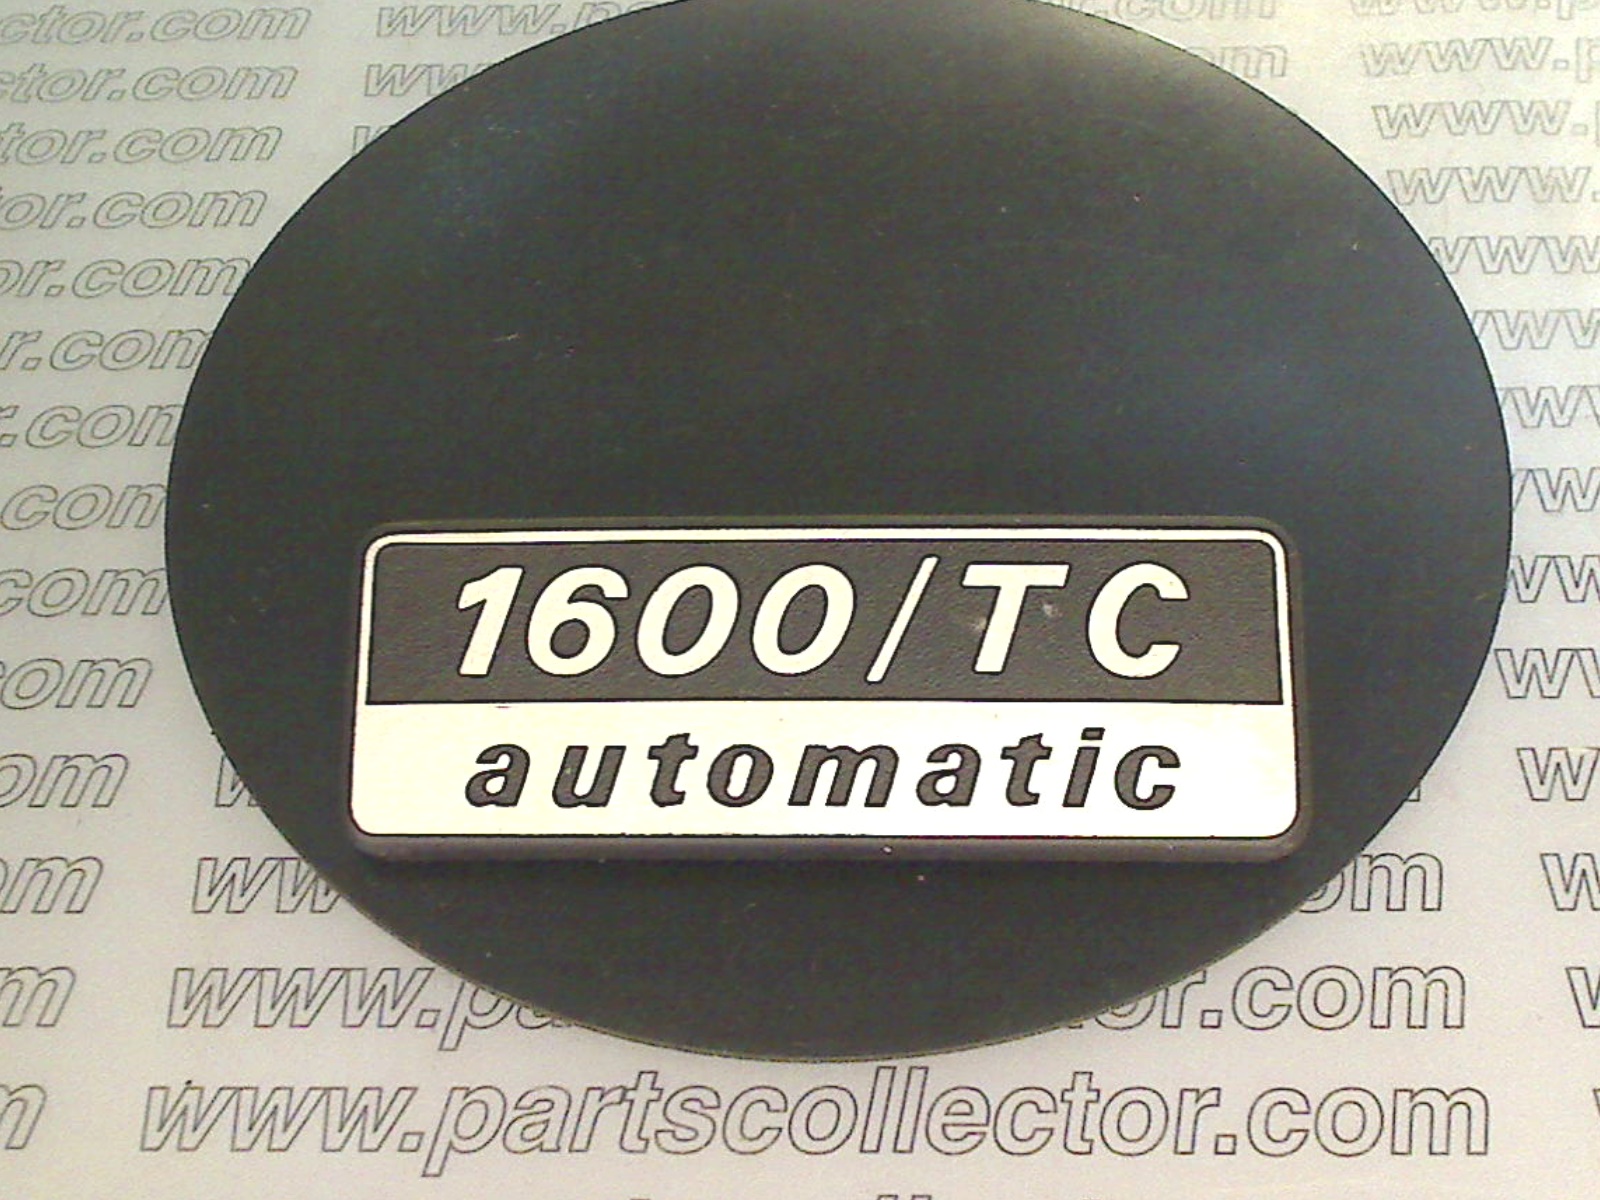 1600 / TC AUTOMATIC EMBLEM